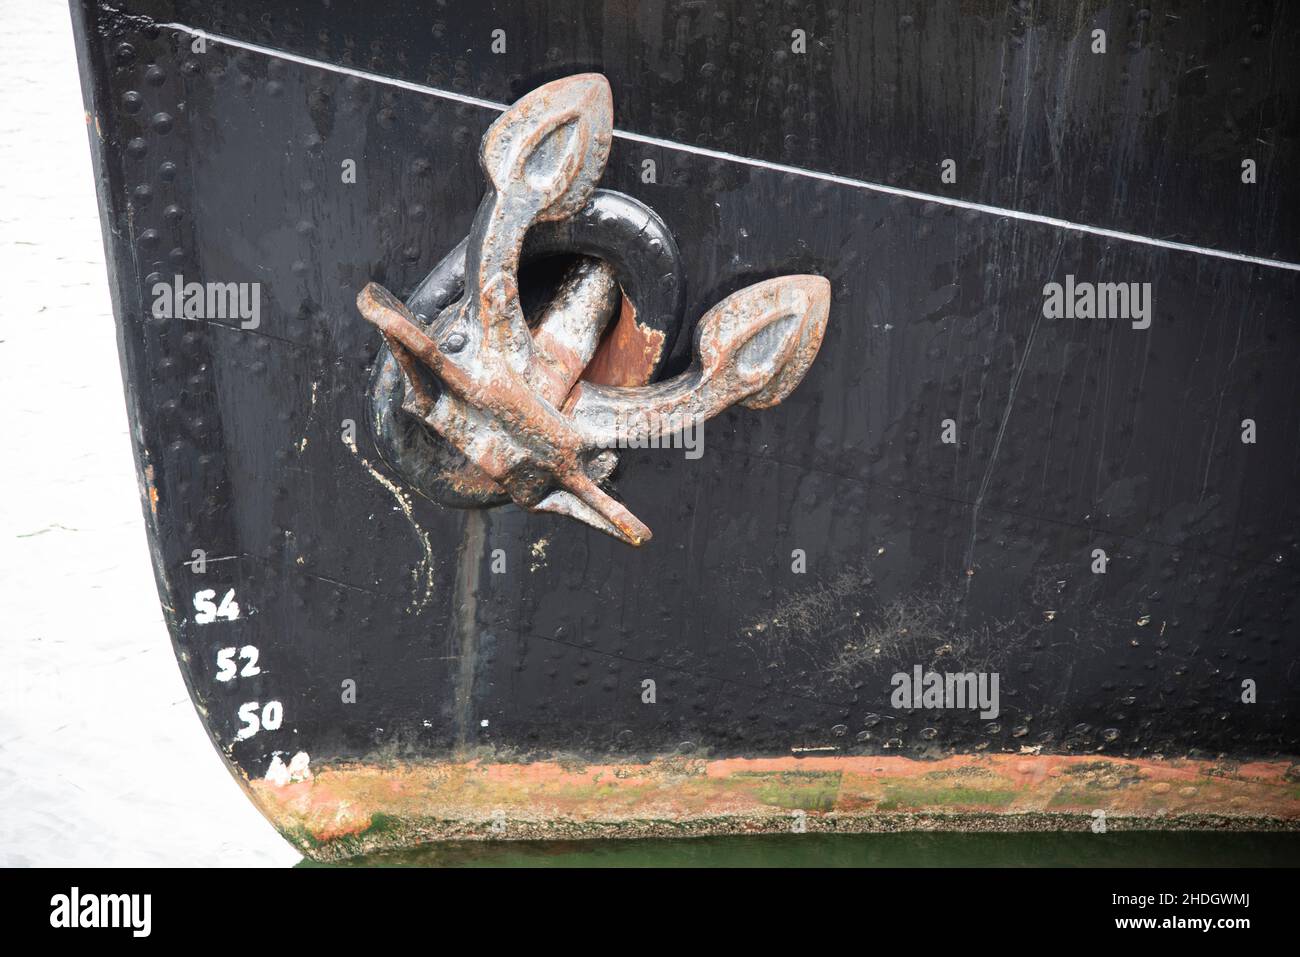 anchors, anchor Stock Photo